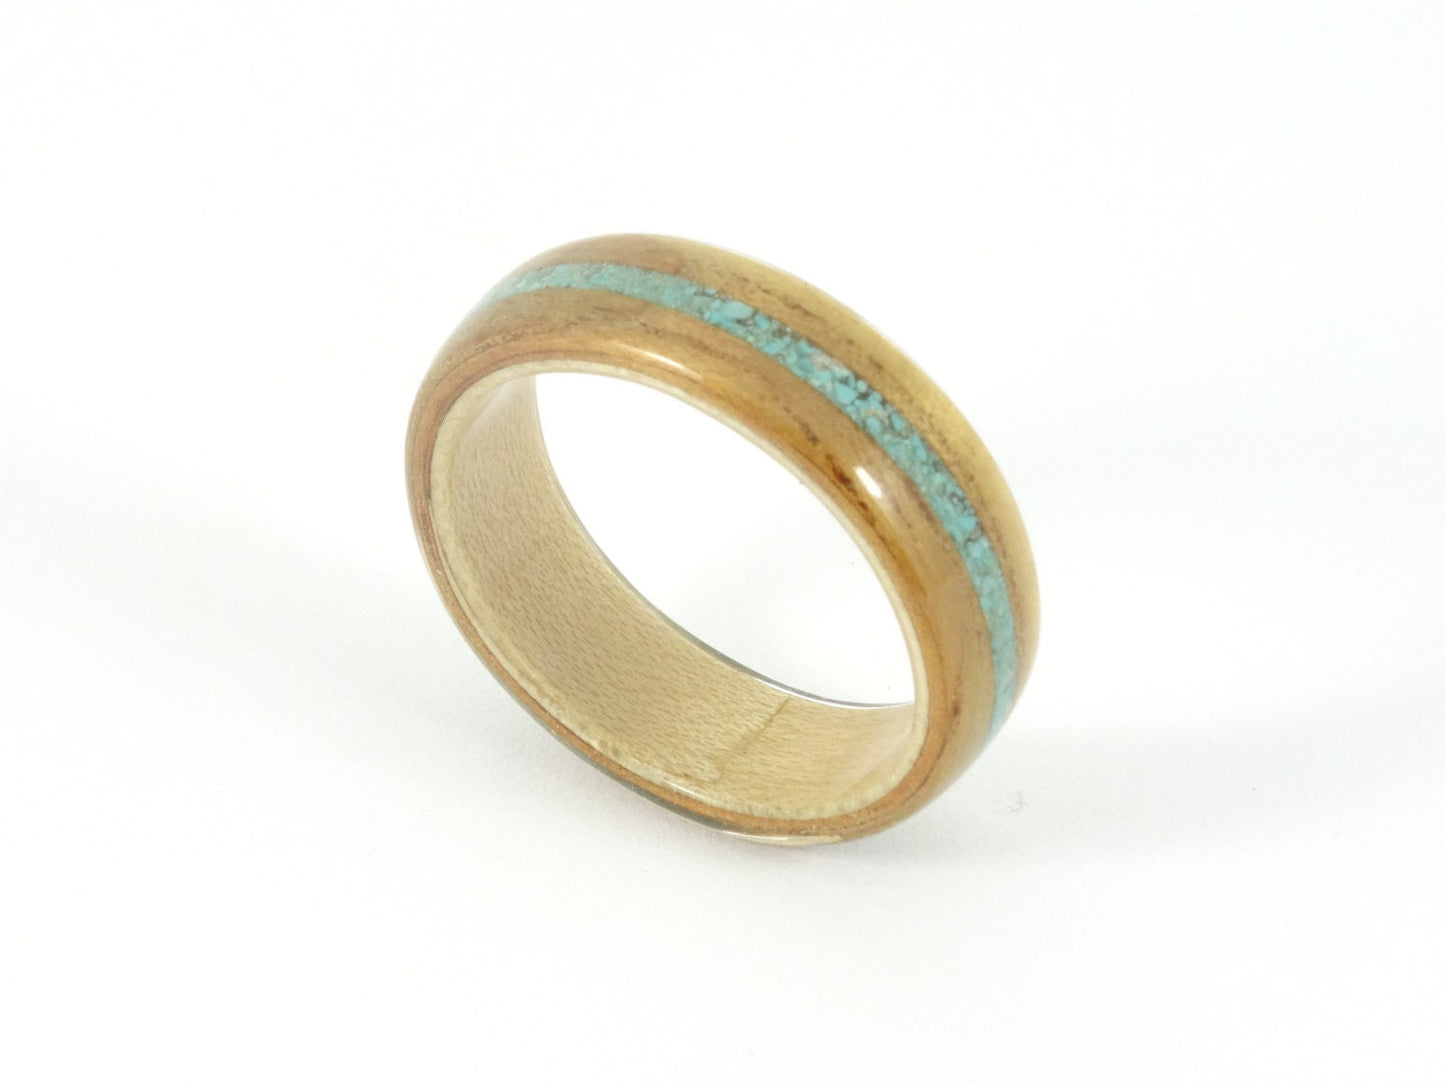 Hawaiian Koa Wood Ring with Maple & Turquoise Inlay.  Bent Wood Ring.